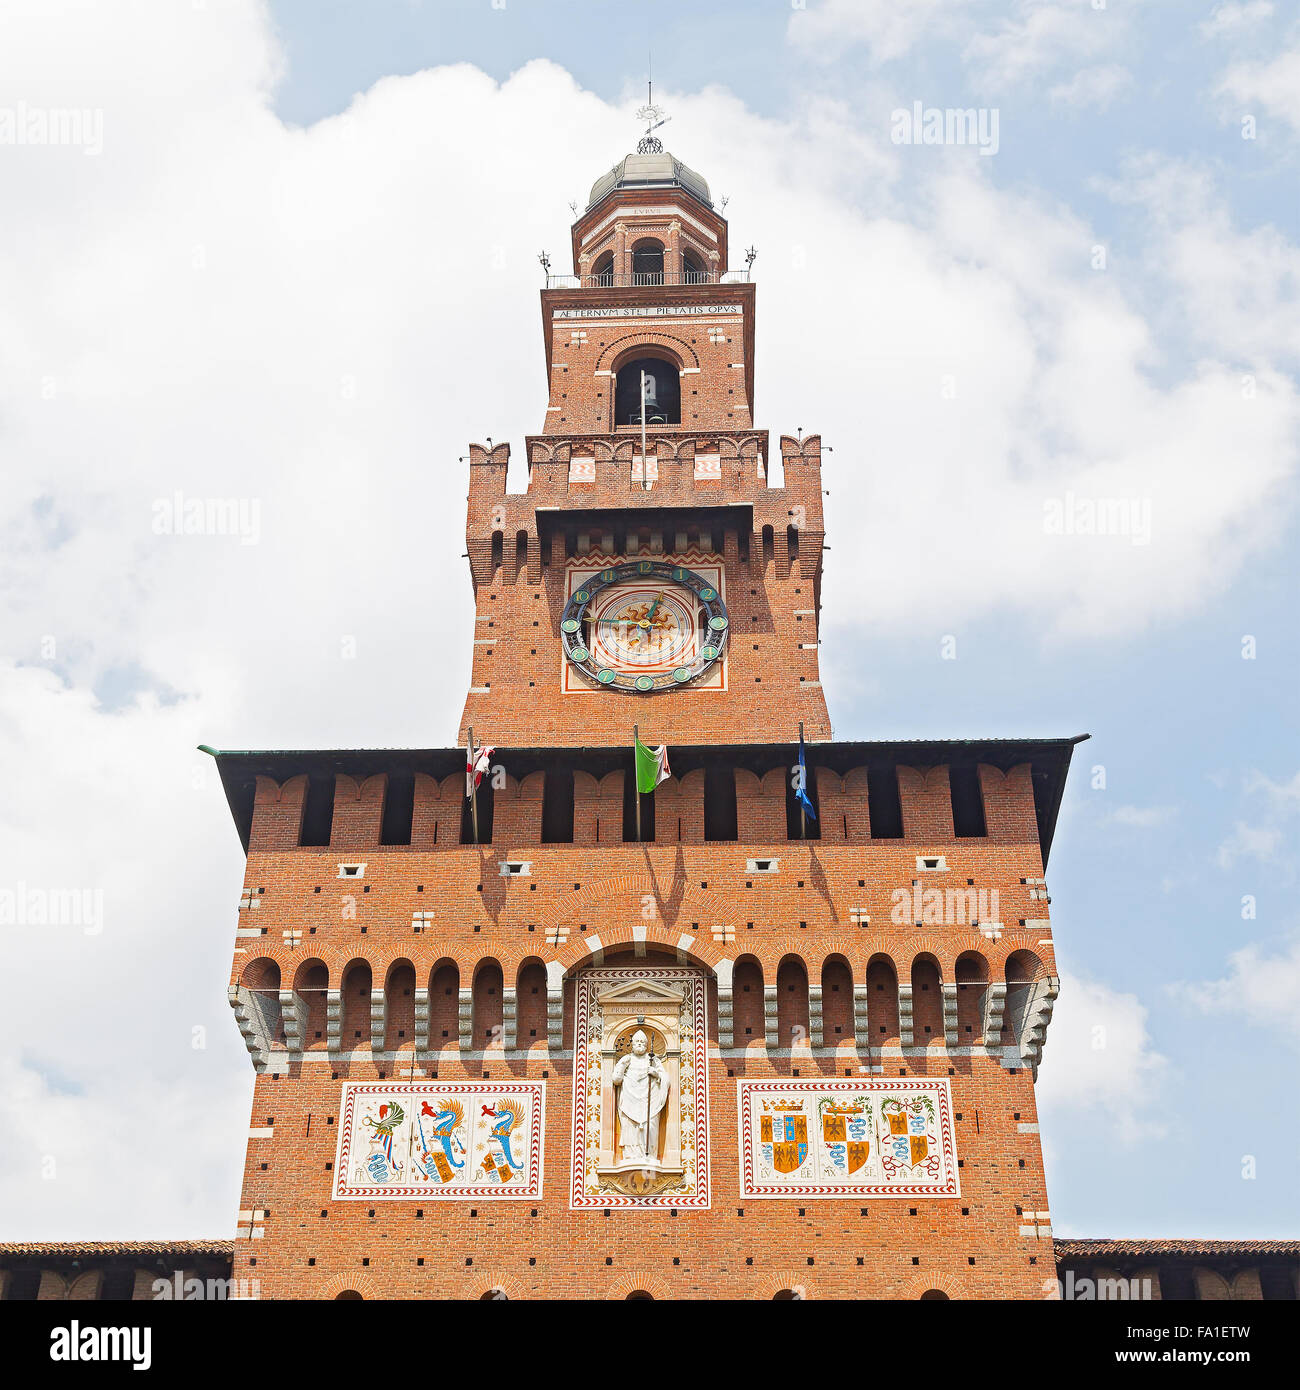 The Filarete Tower of the Castello Sforzesco in Milan, Italy. Stock Photo